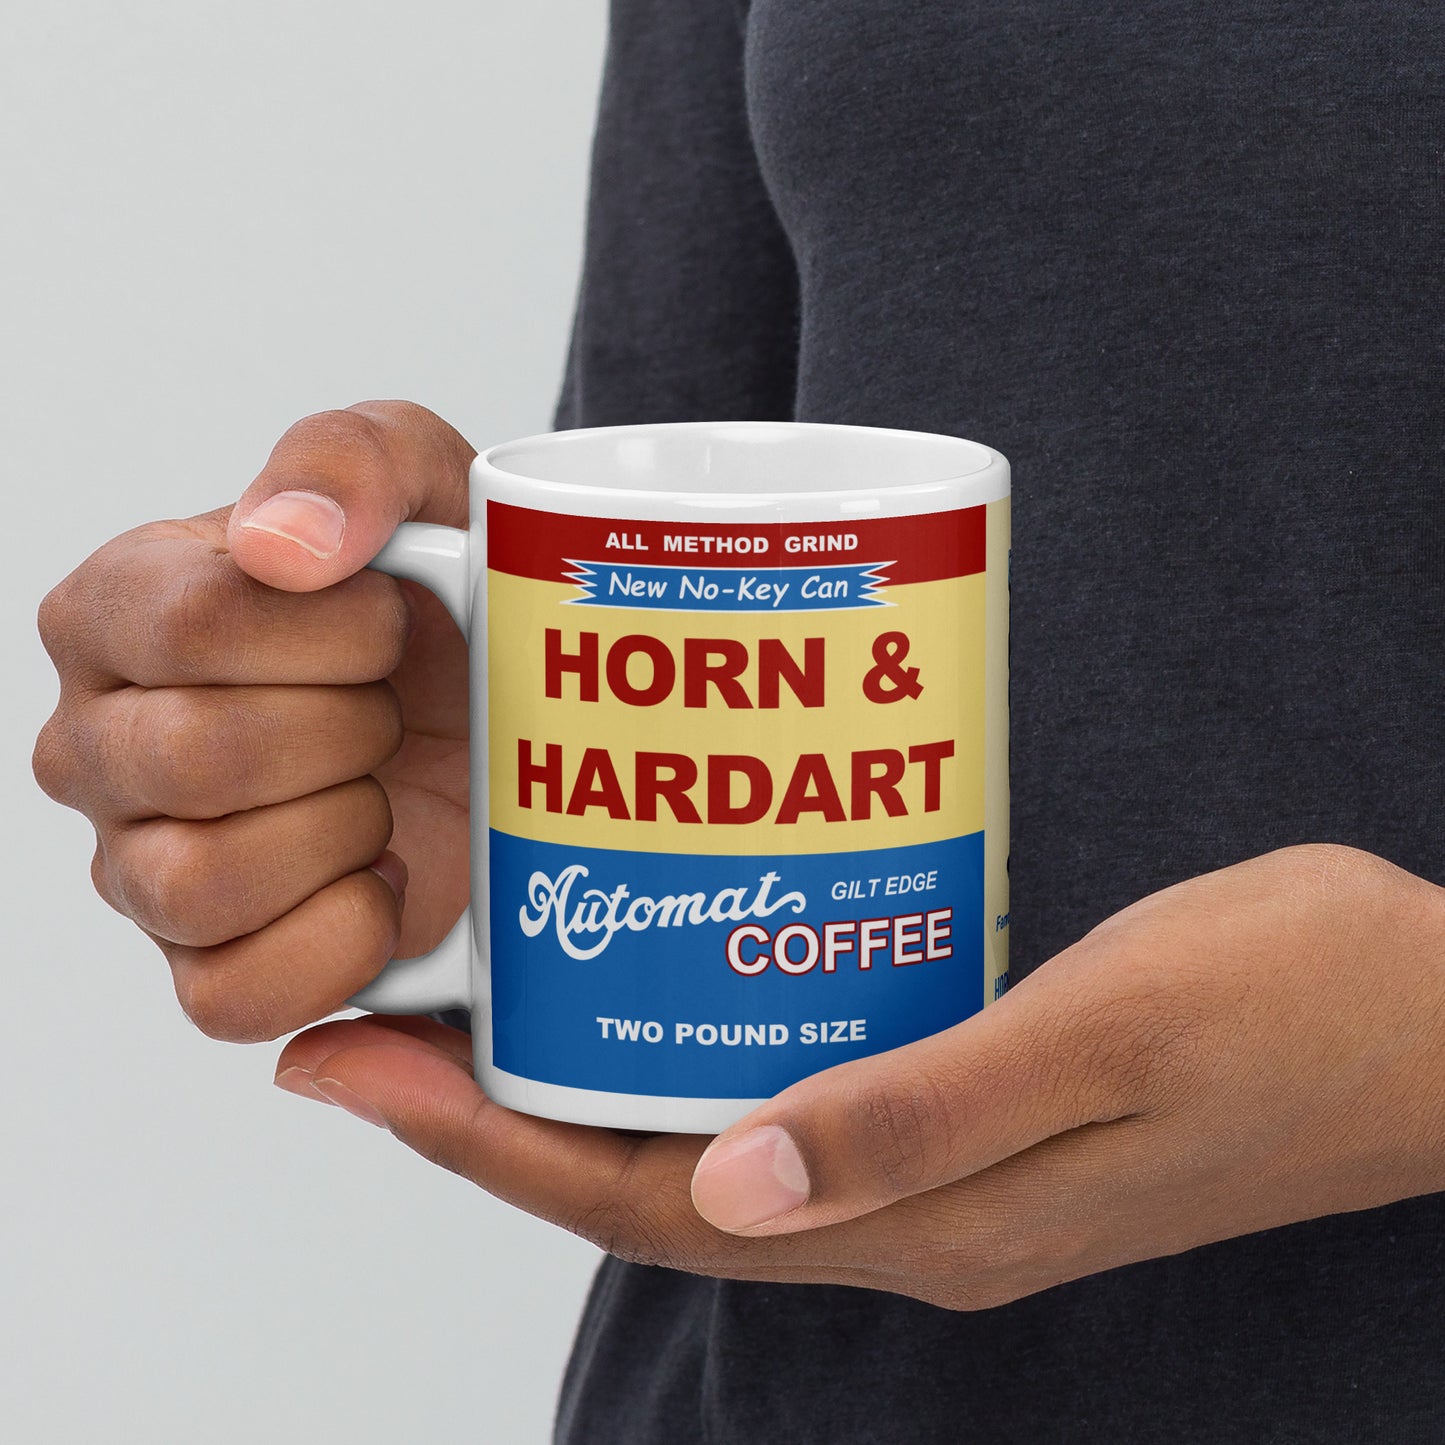 Horn & Hardart All Method Grind Coffee Mug.